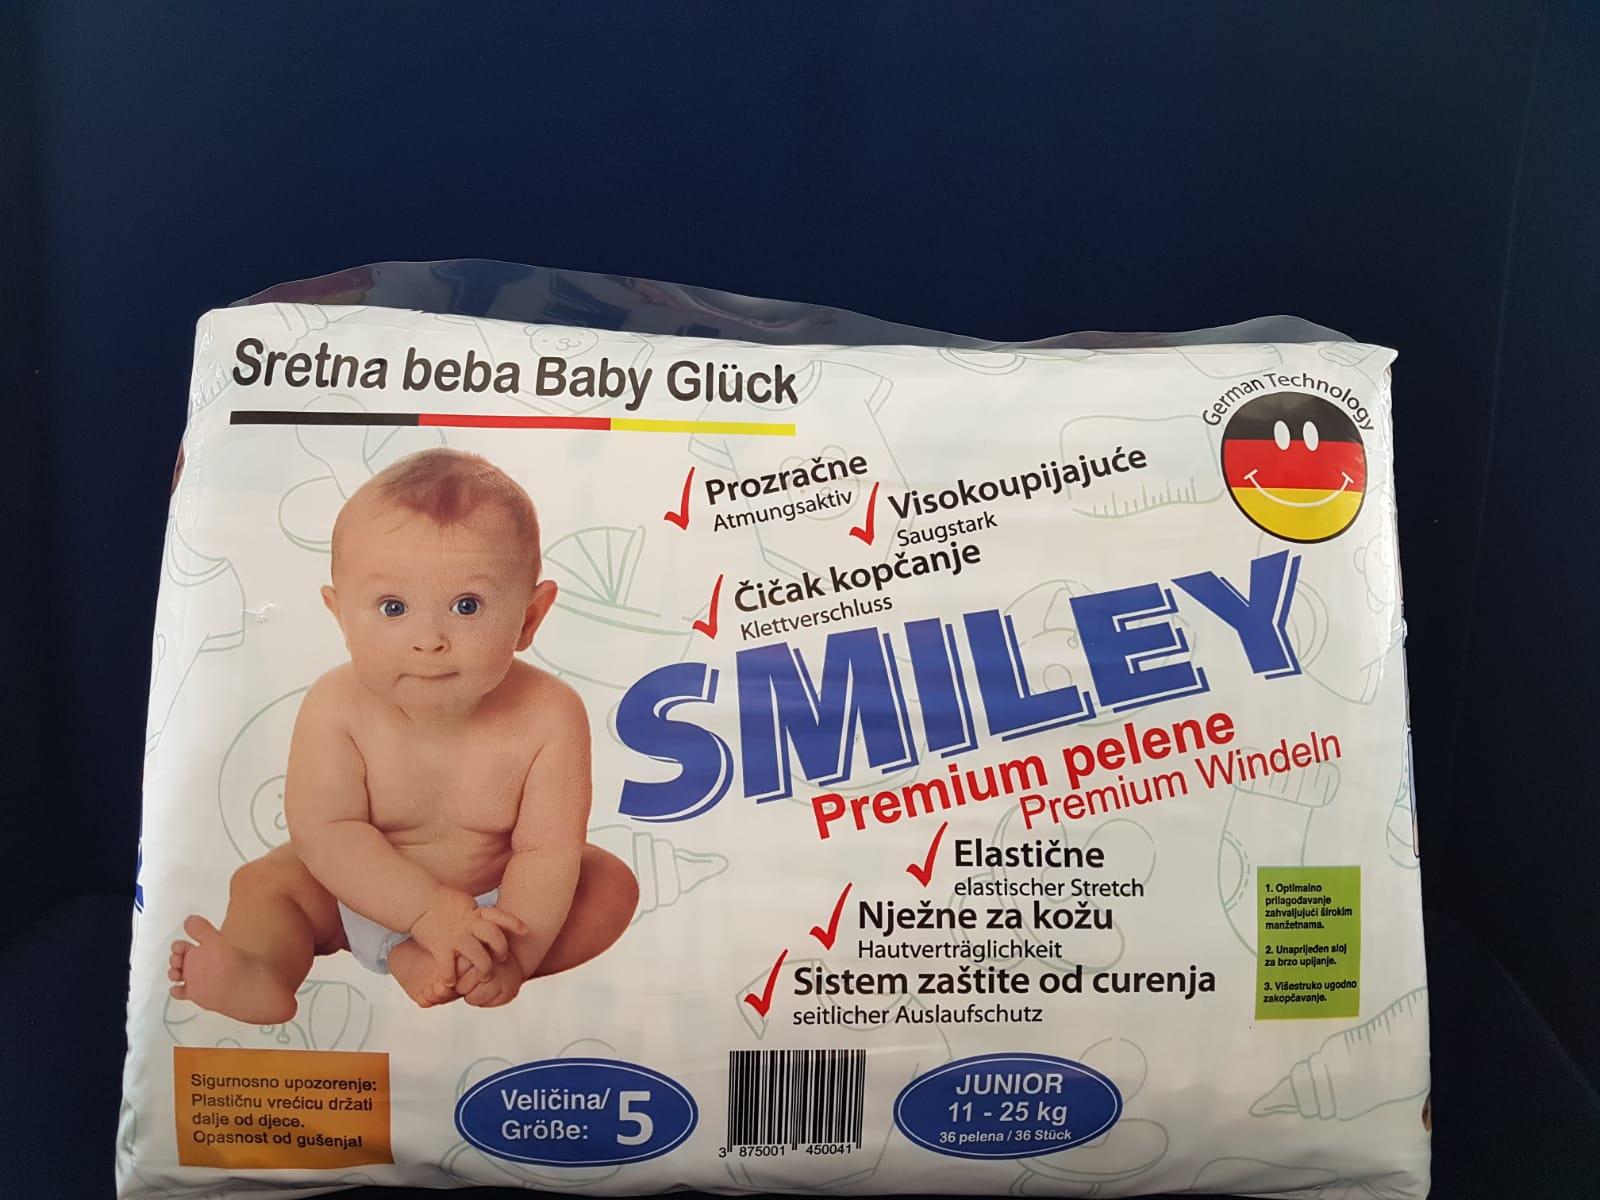 Premium baby pelene "Smiley" - Avaz